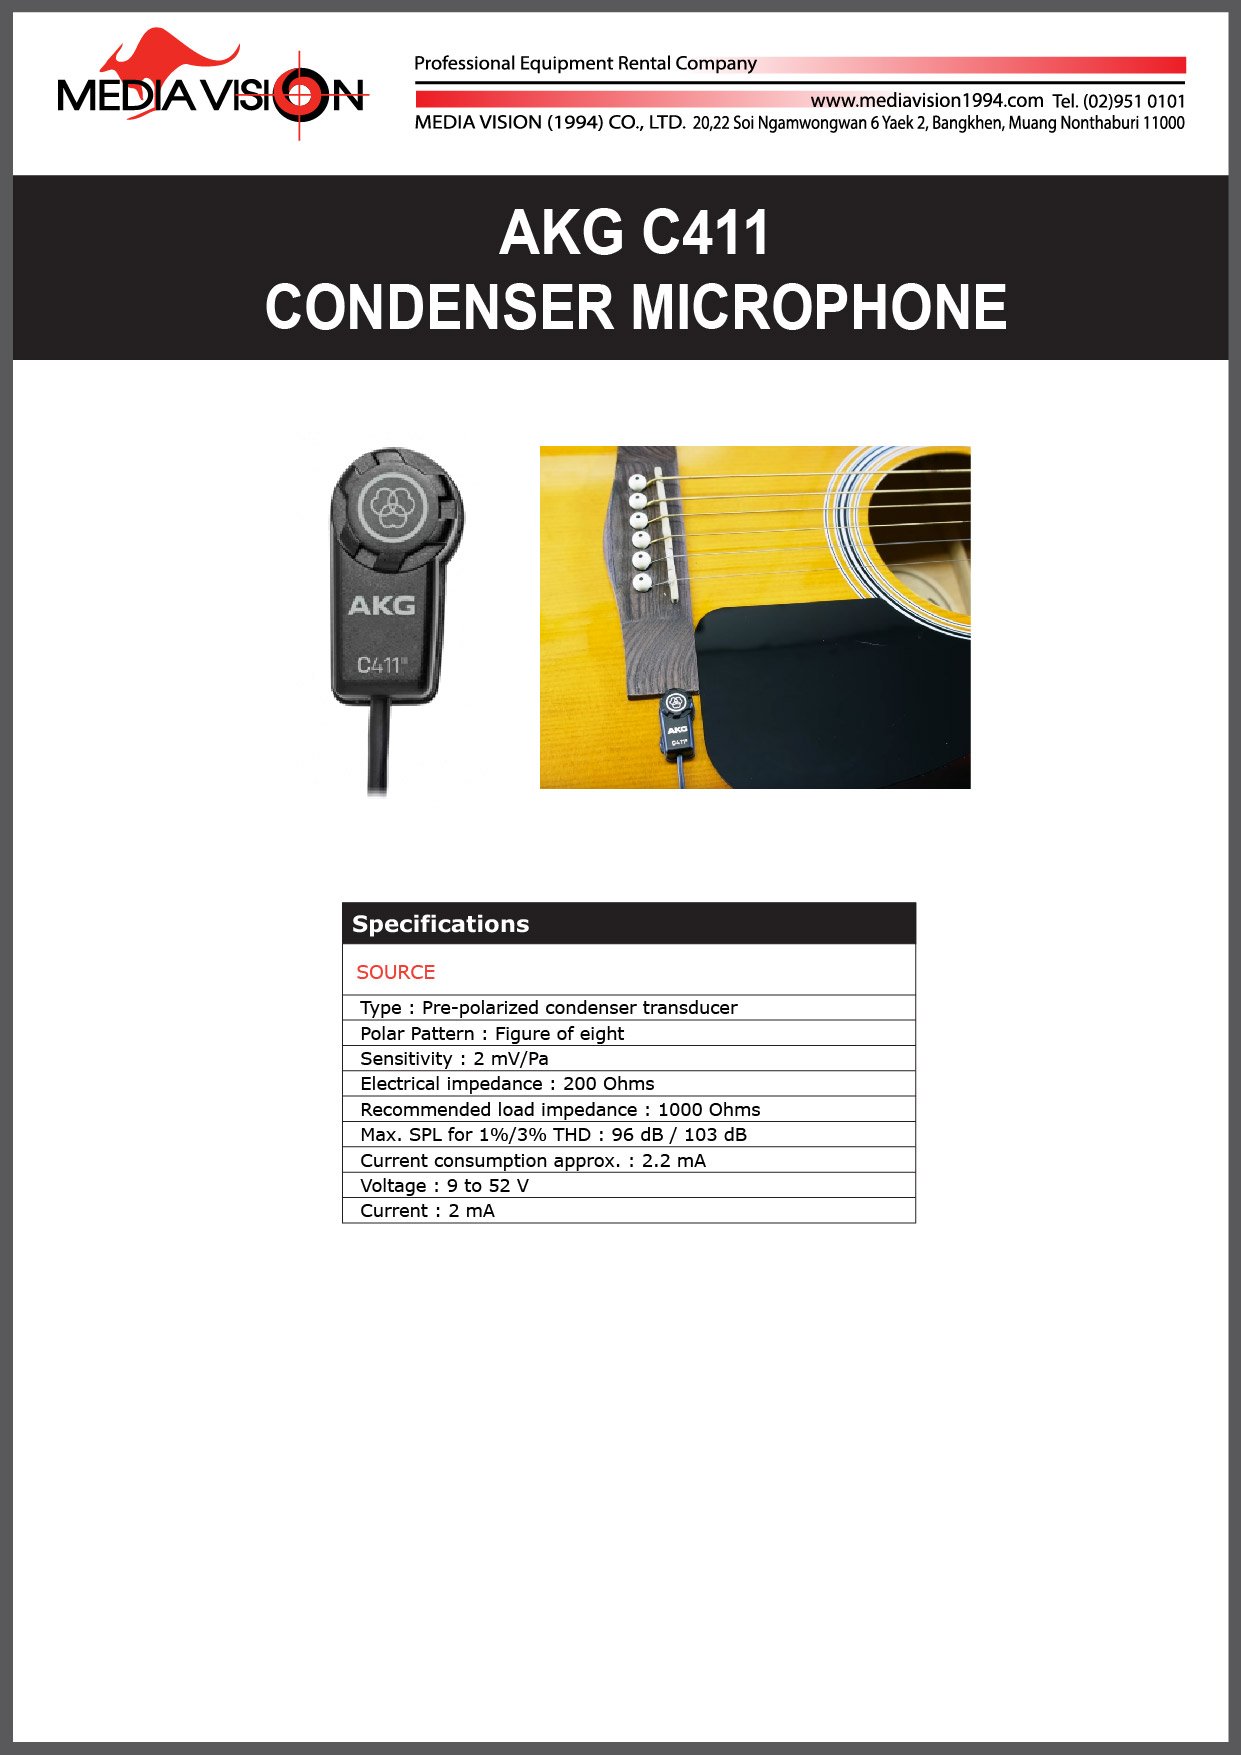 AKG C411 CONDENSER MICROPHONE